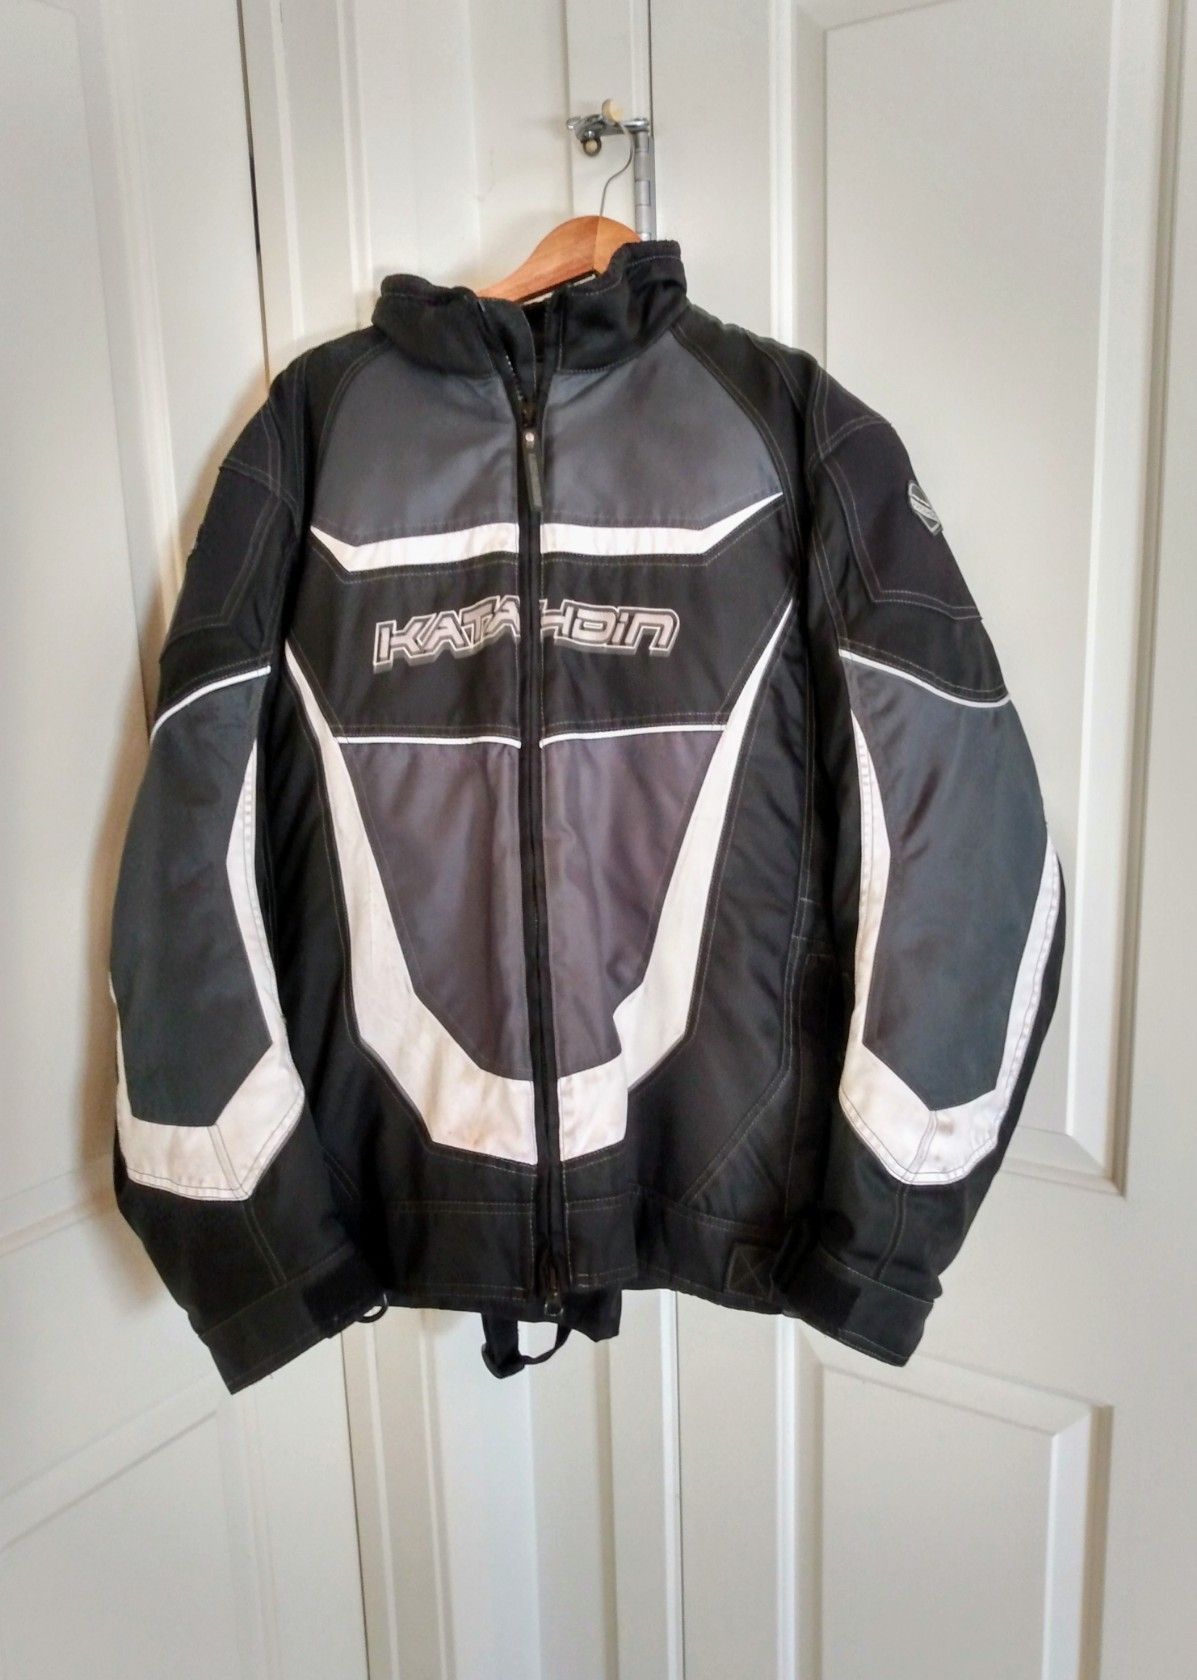 Katahdin Extreme Gear Men's Snowmobile Jacket and Bob Snow Pants - Size L